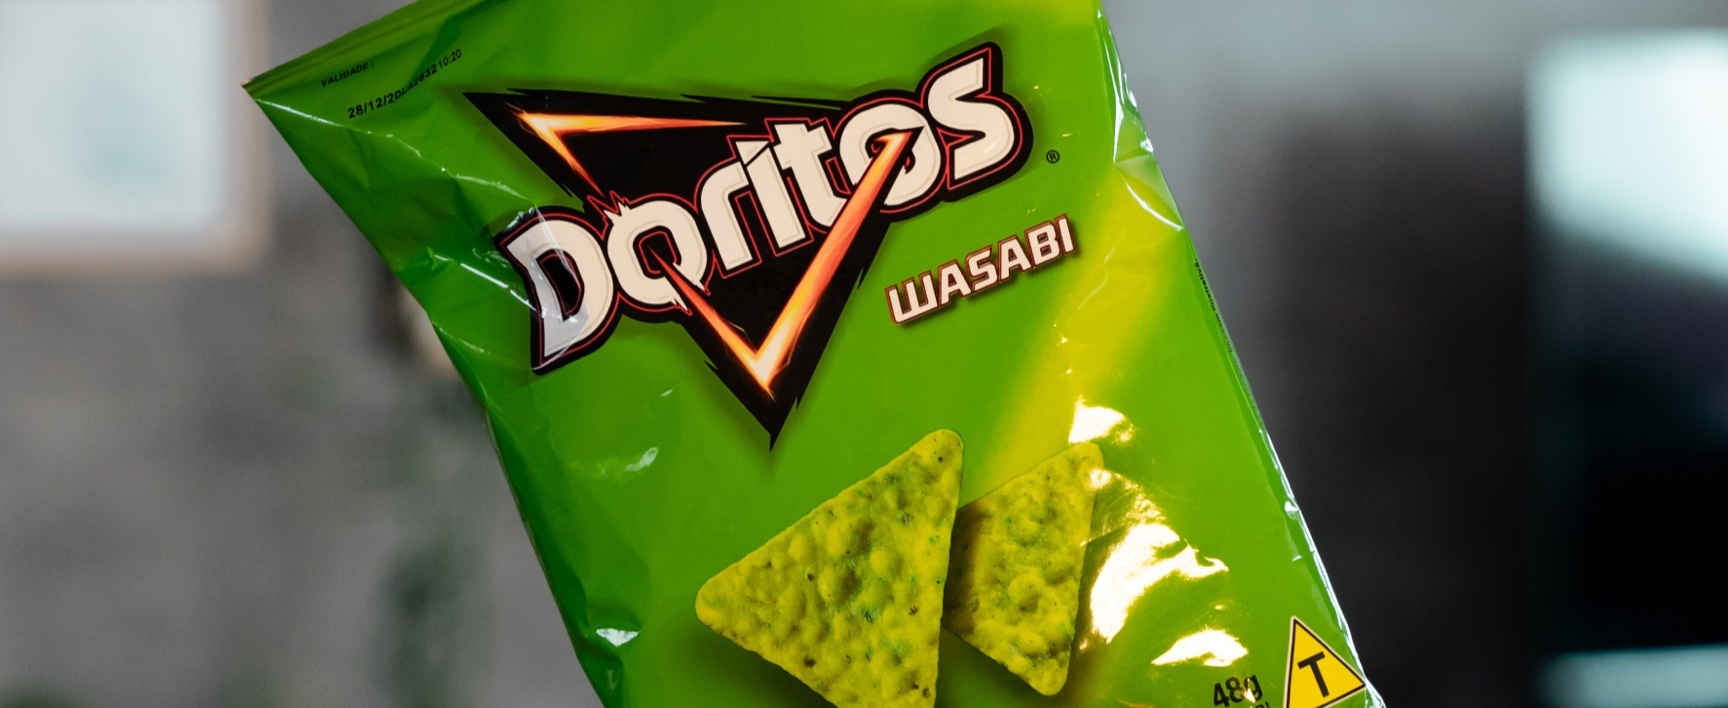 Doritos Wasabi Flavored Chips